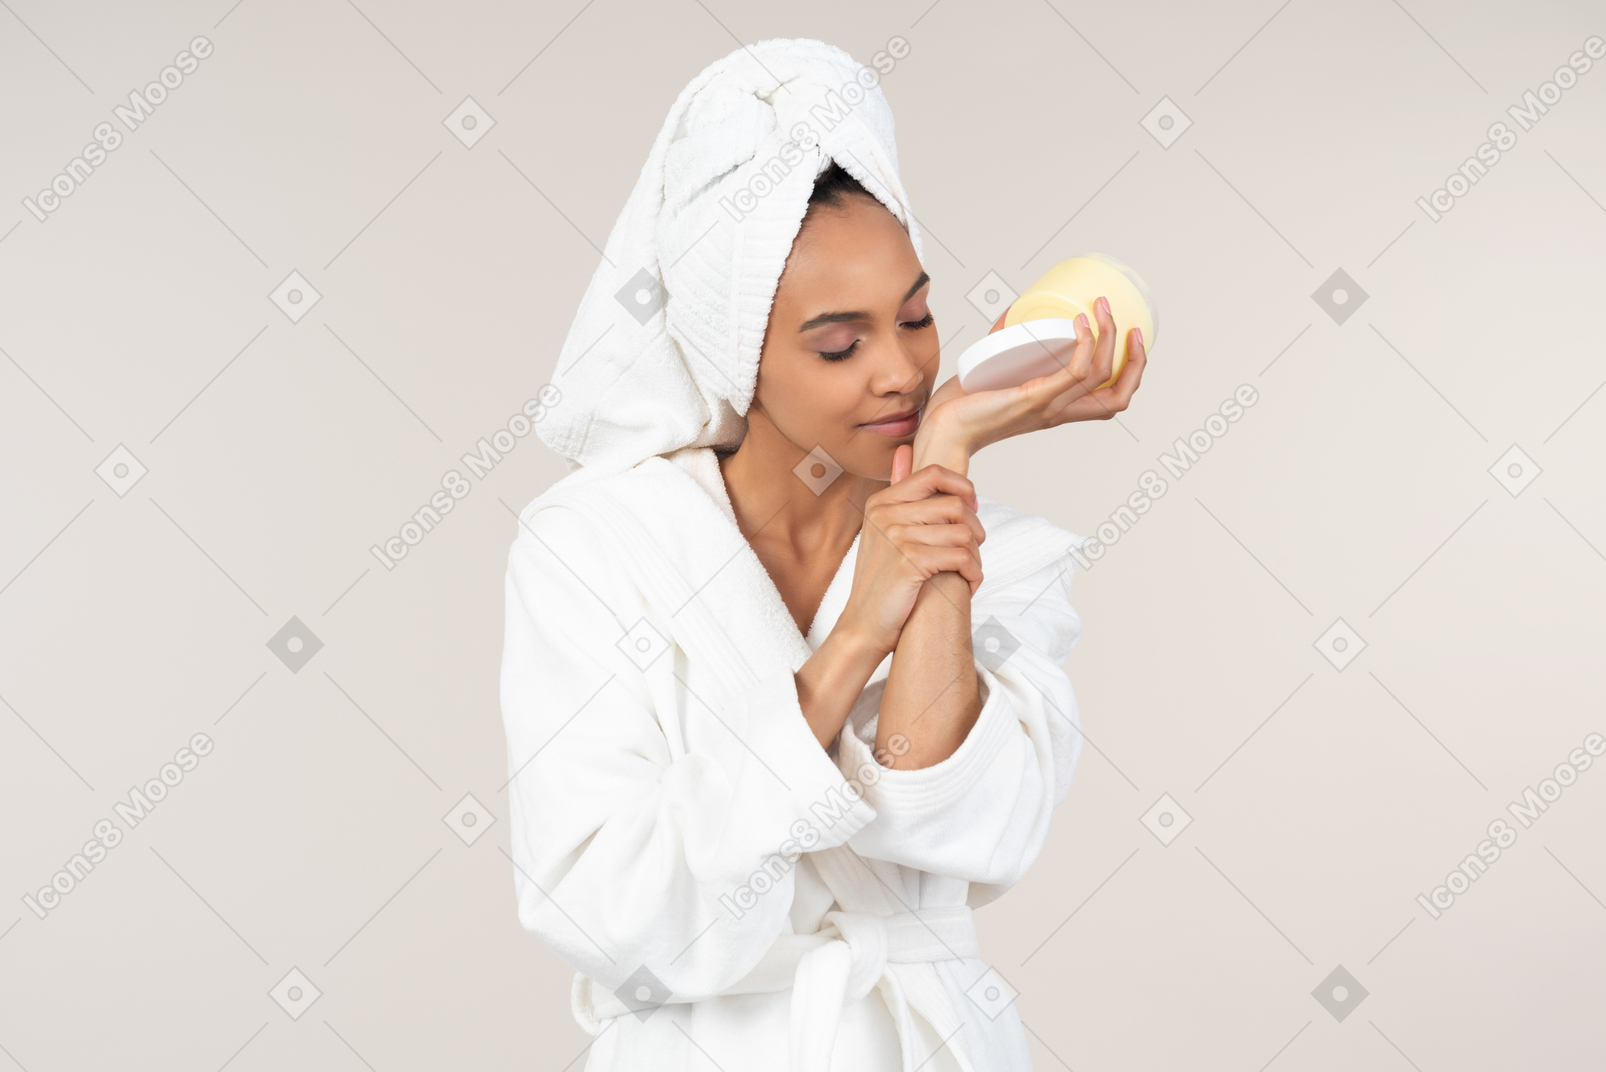 Black woman in white bathrobe and head towel enjoying her skin care routine